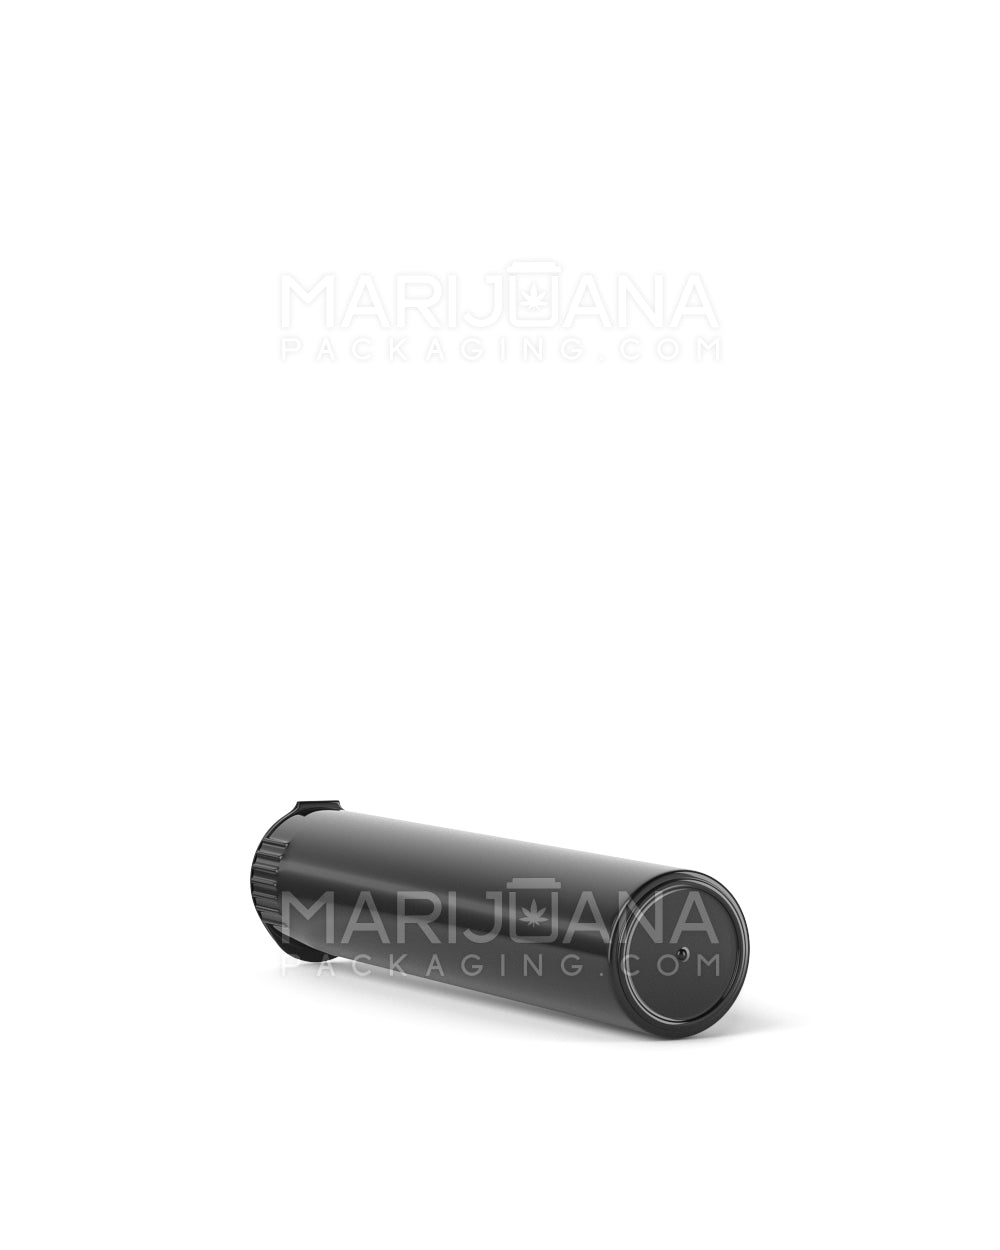 Child Resistant | Pop Top Opaque Plastic Pre-Roll Tubes | 90mm - Black - 1000 Count - 6